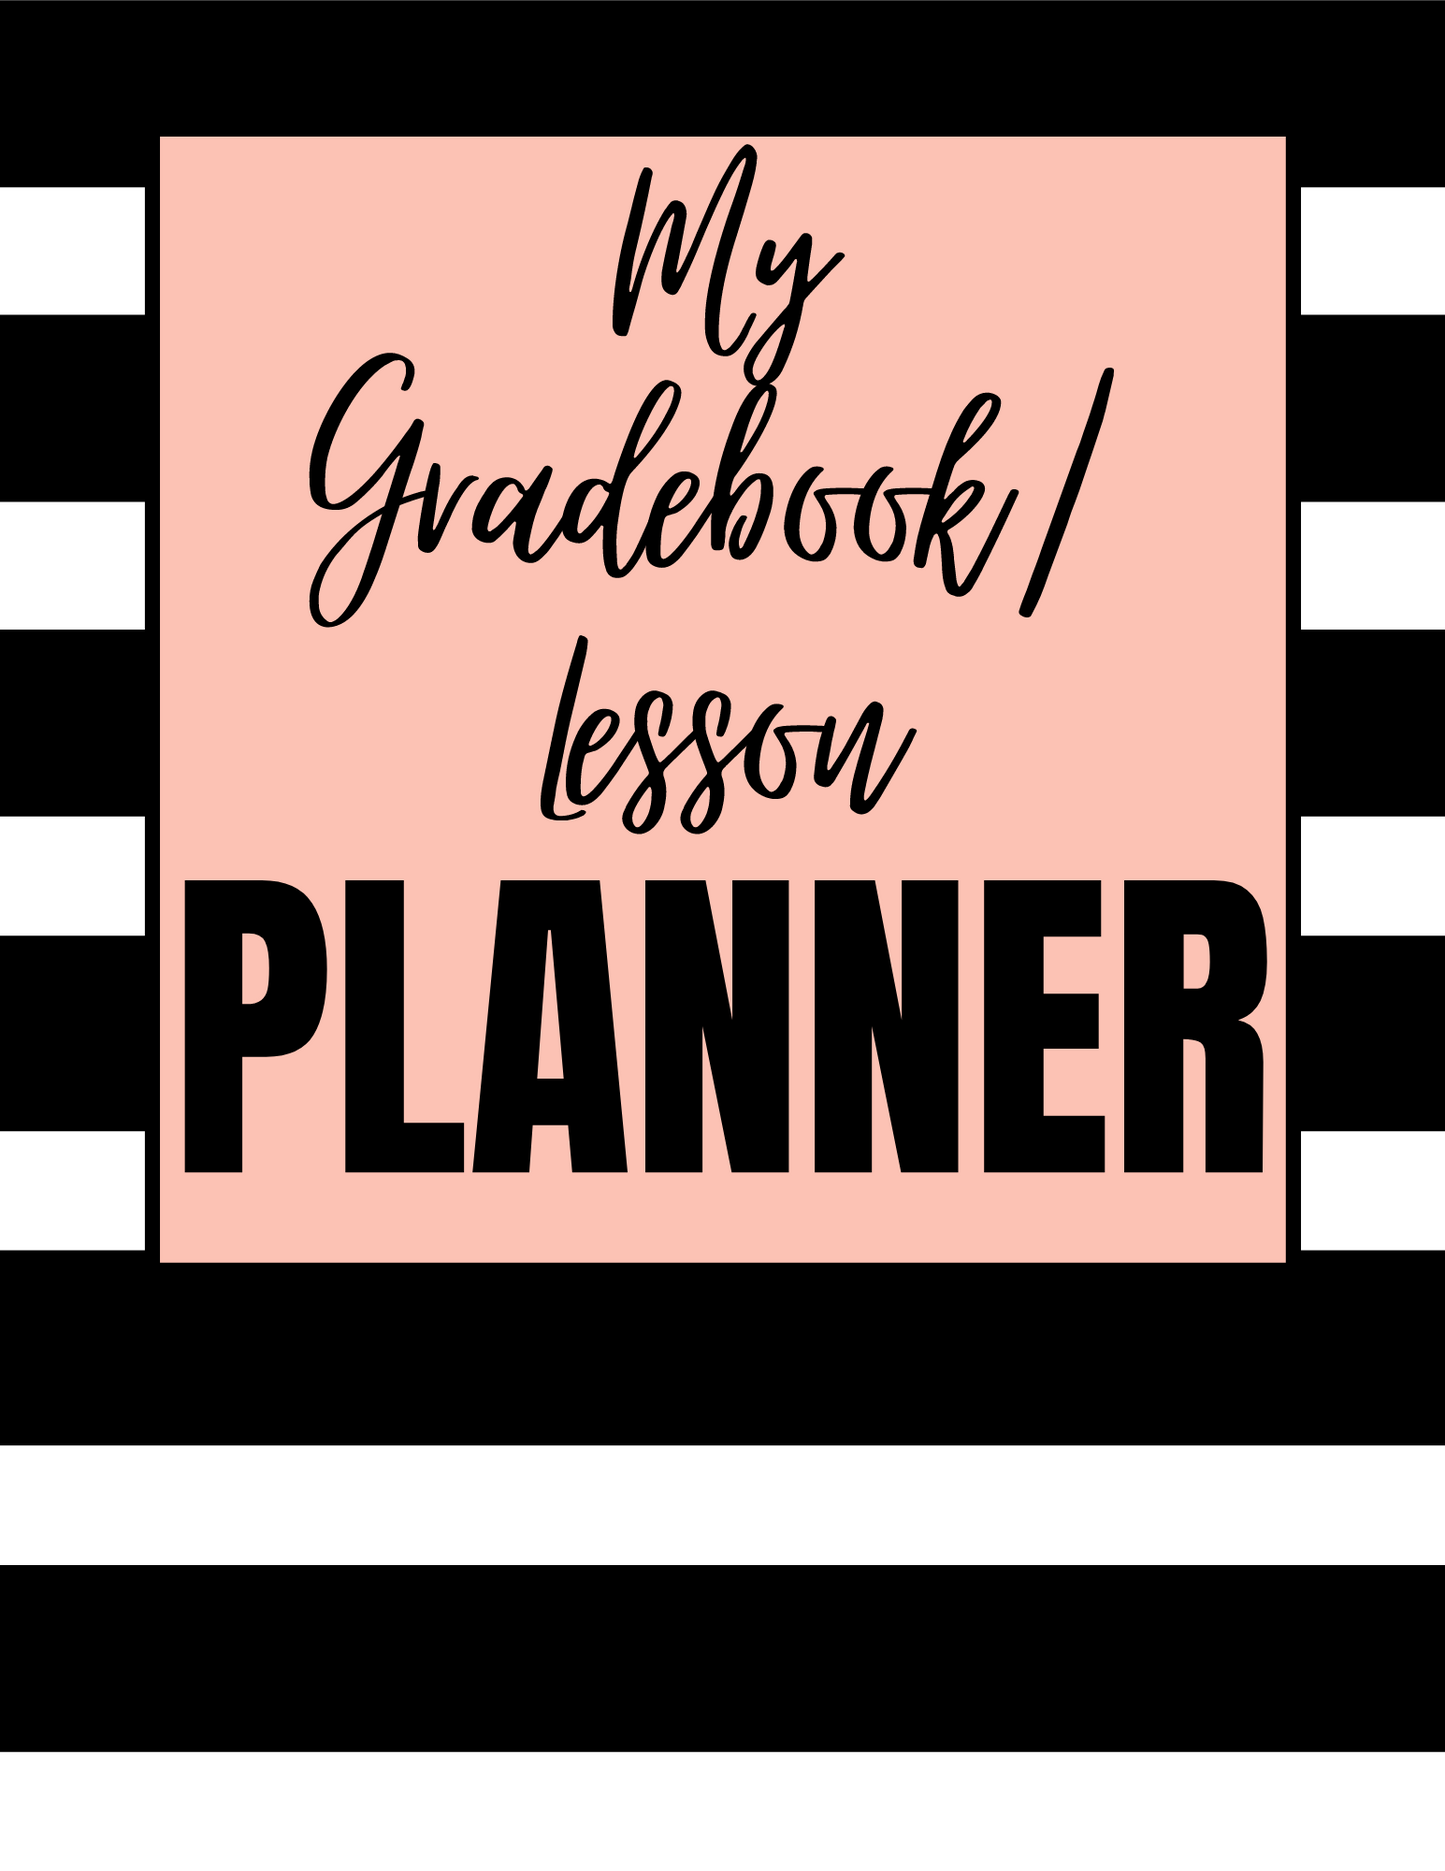 Lesson Plan/ Gradebooks